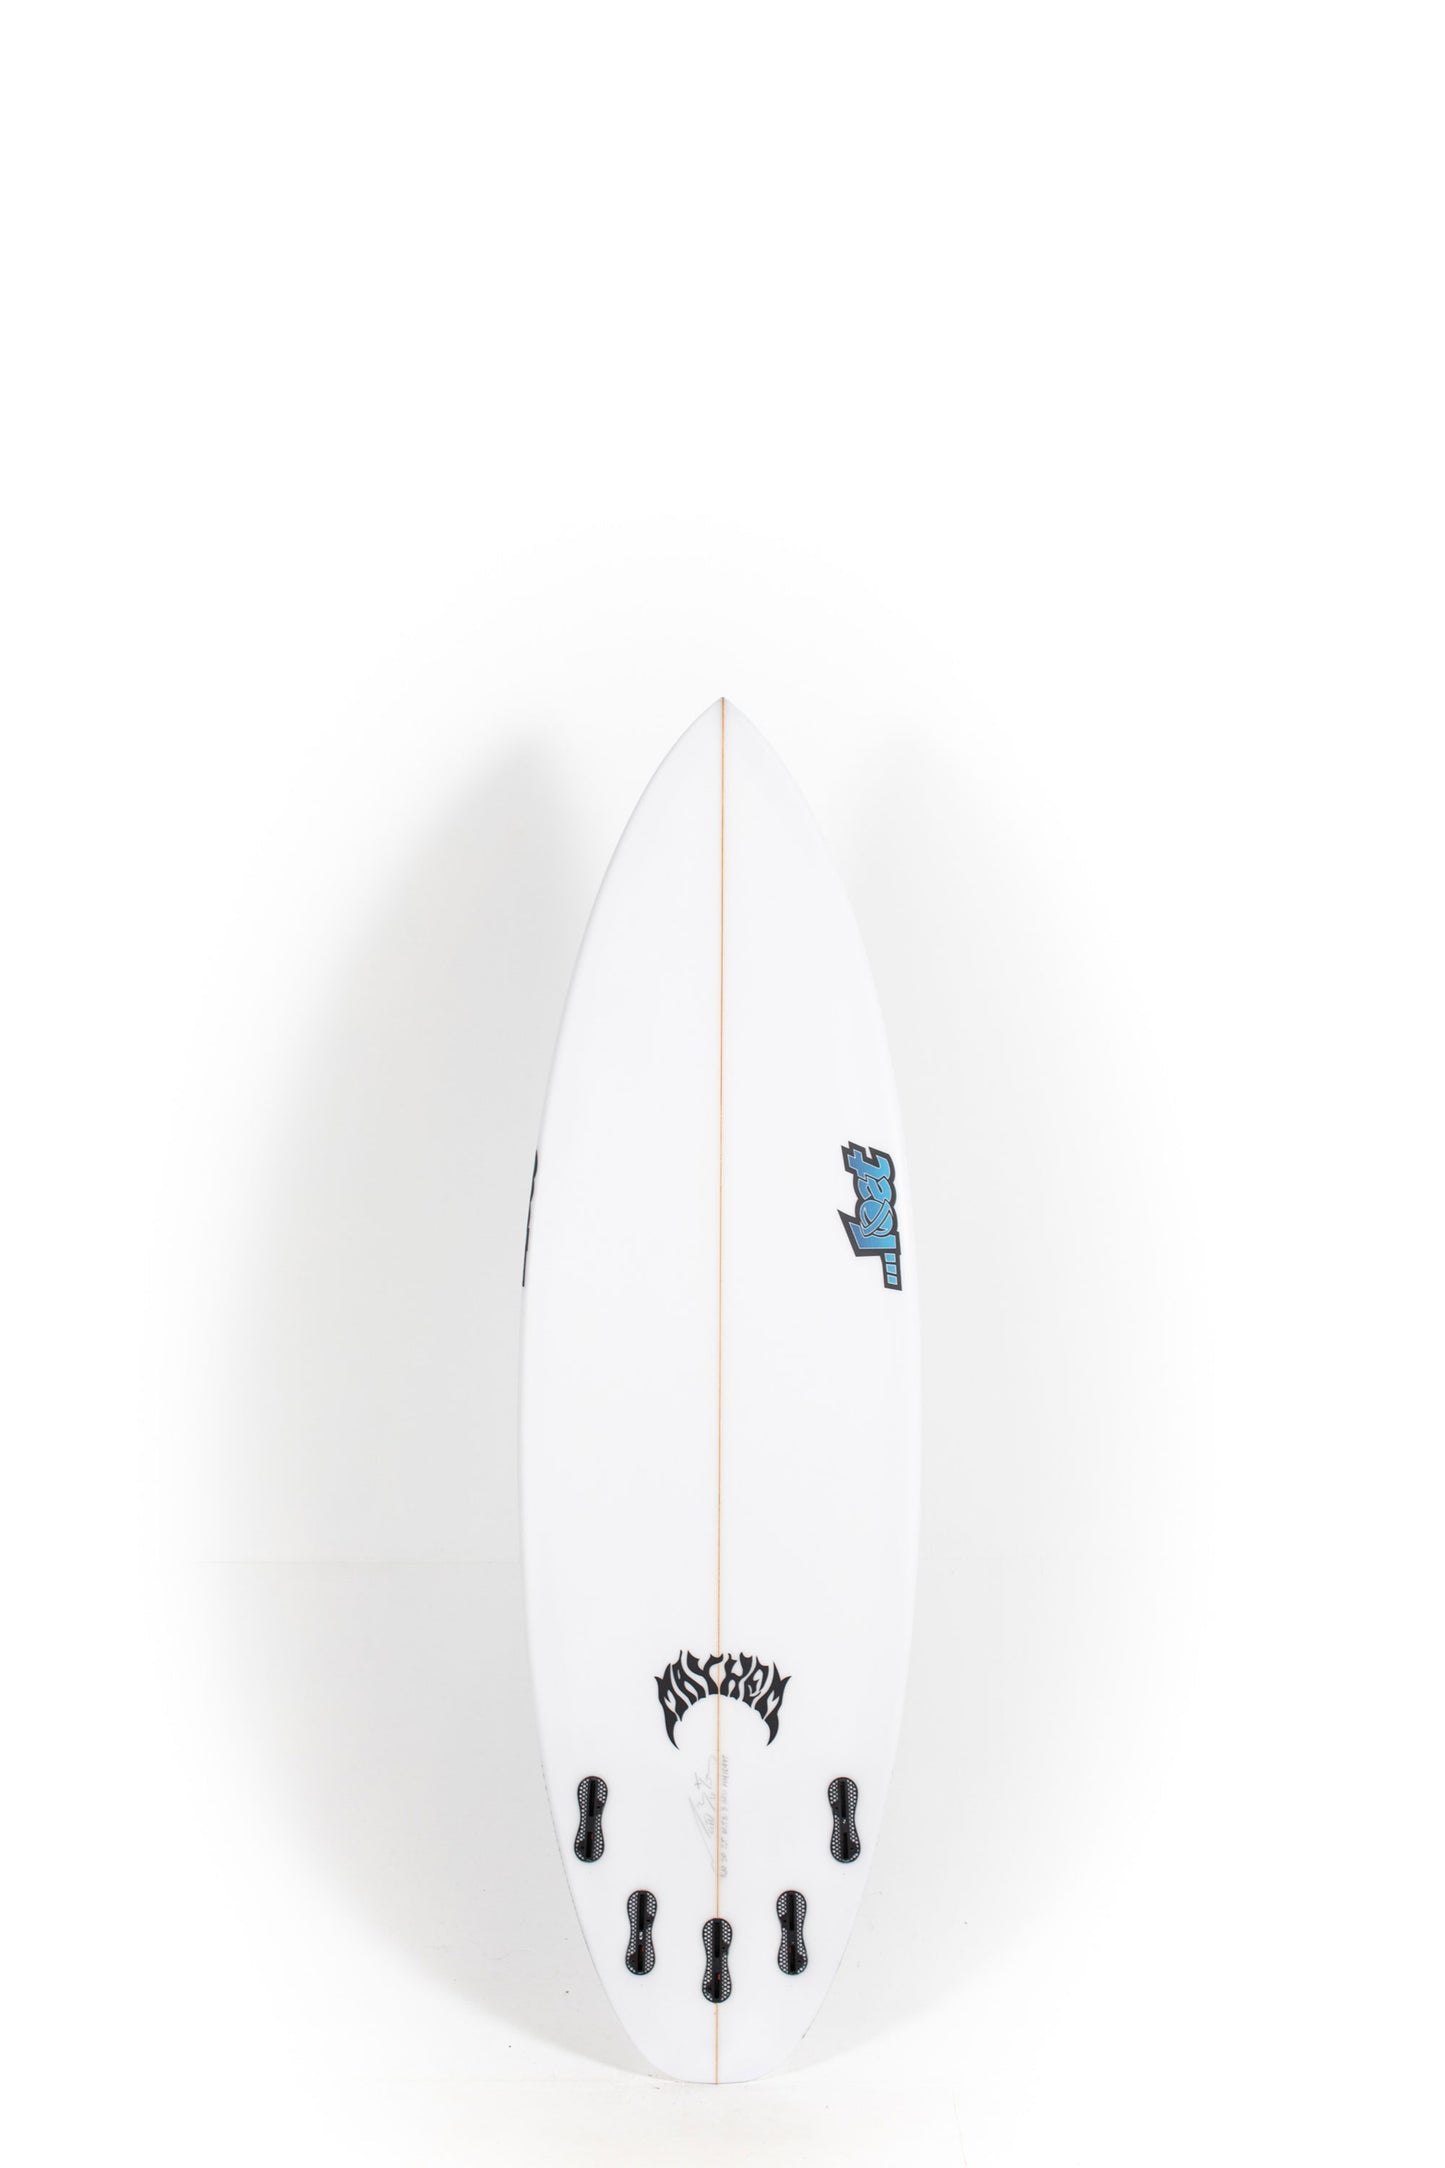 
                  
                    Pukas Surf Shop - Lost Surfboard - PUDDLE JUMPER-PRO by Matt Biolos - 5'10" x 20 x 2.5 x 31,5L - MH16495
                  
                